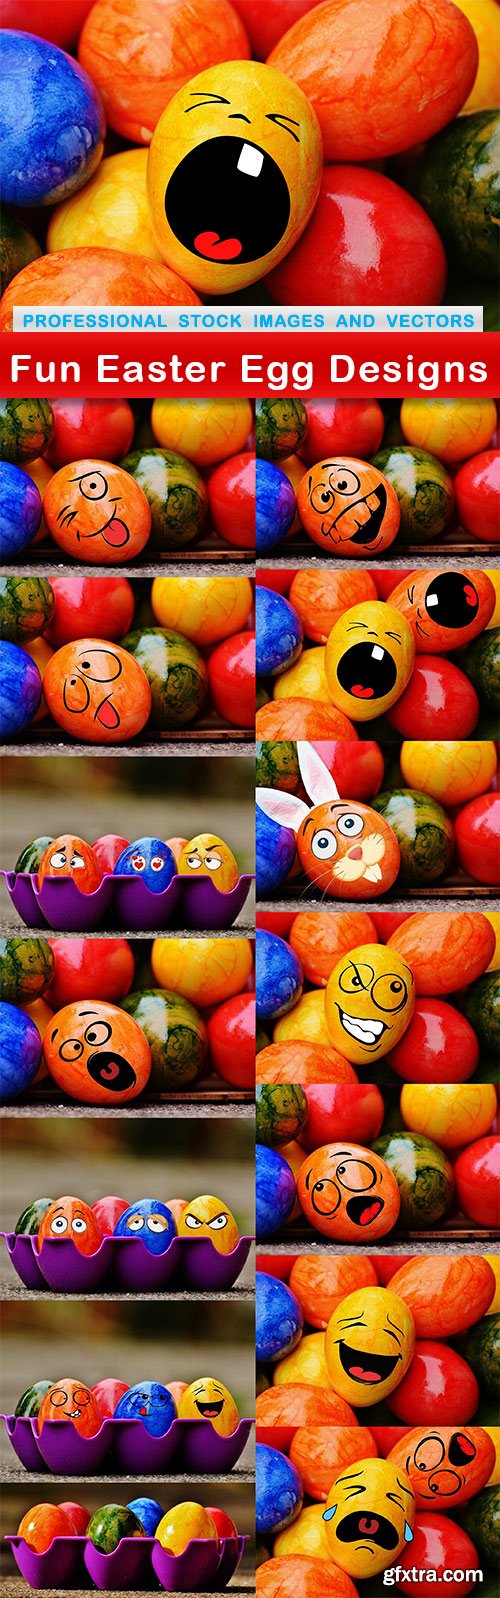 Fun Easter Egg Designs - 15 UHQ JPEG